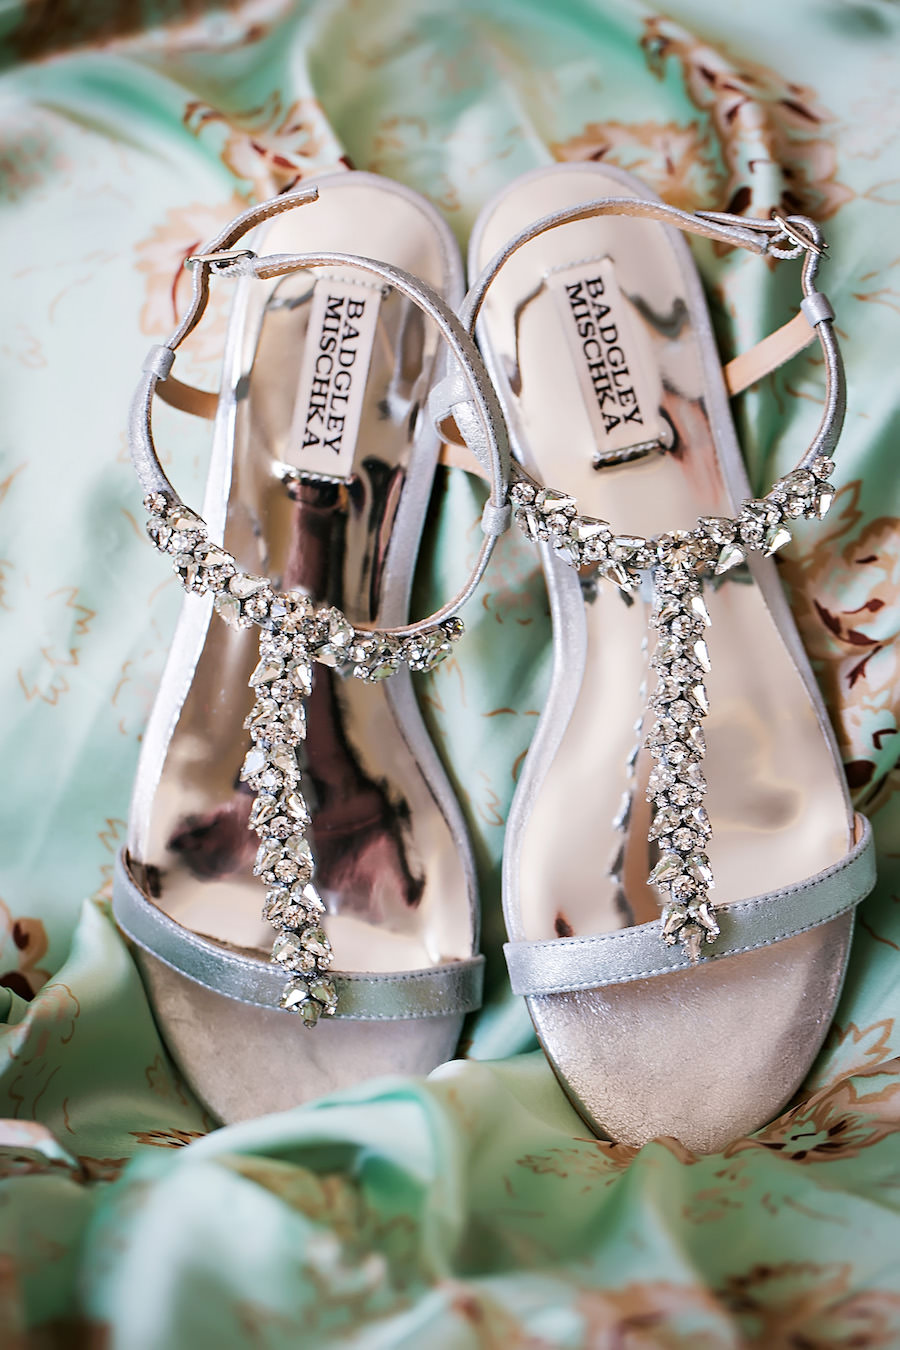 Badgley Mischka Bridal Wedding Shoes Sandals with Crystal, Rhinestone Straps